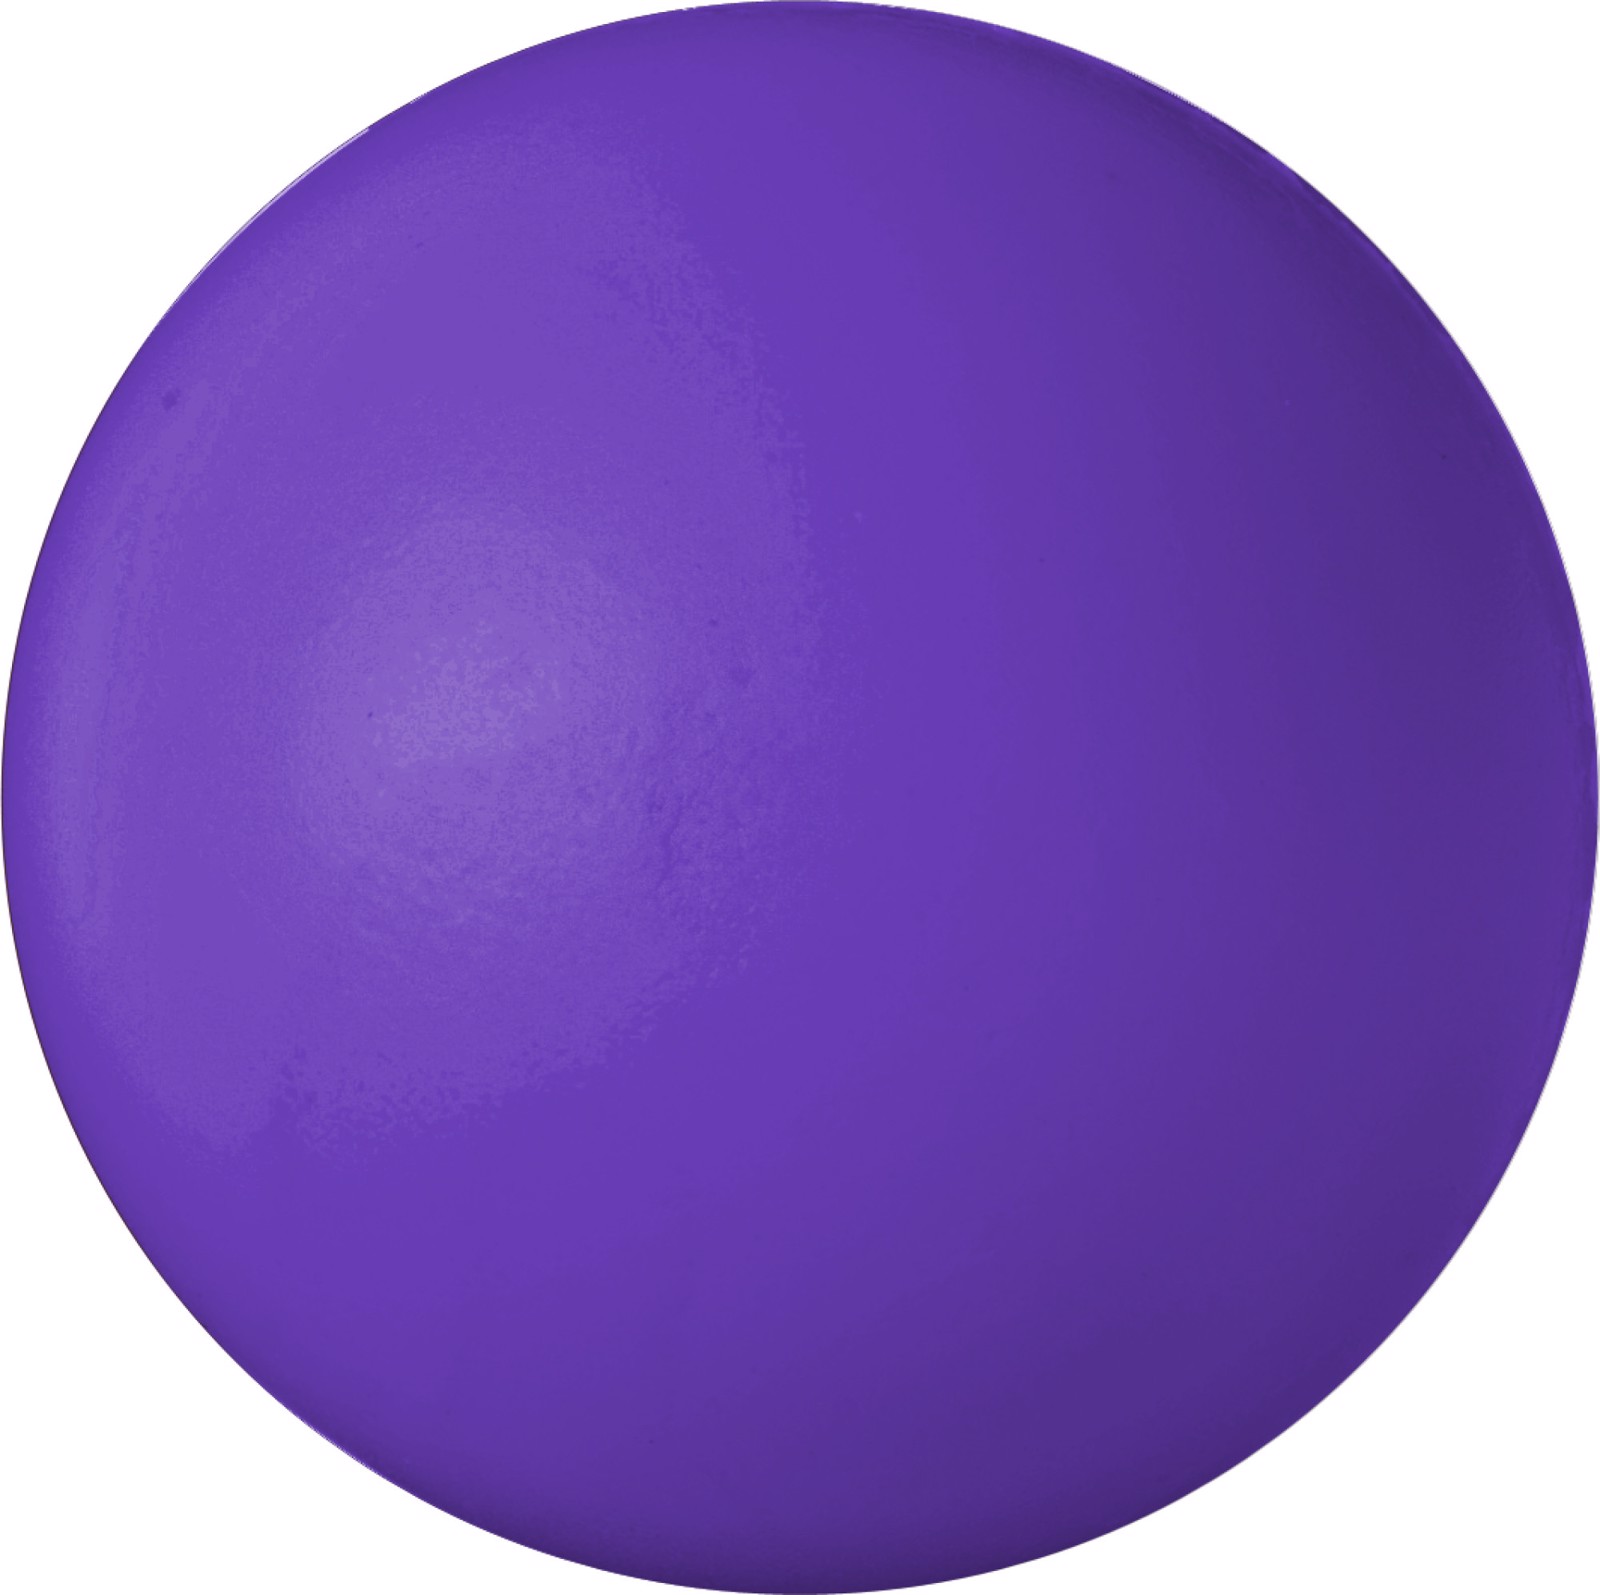 PU foam stress ball - Purple